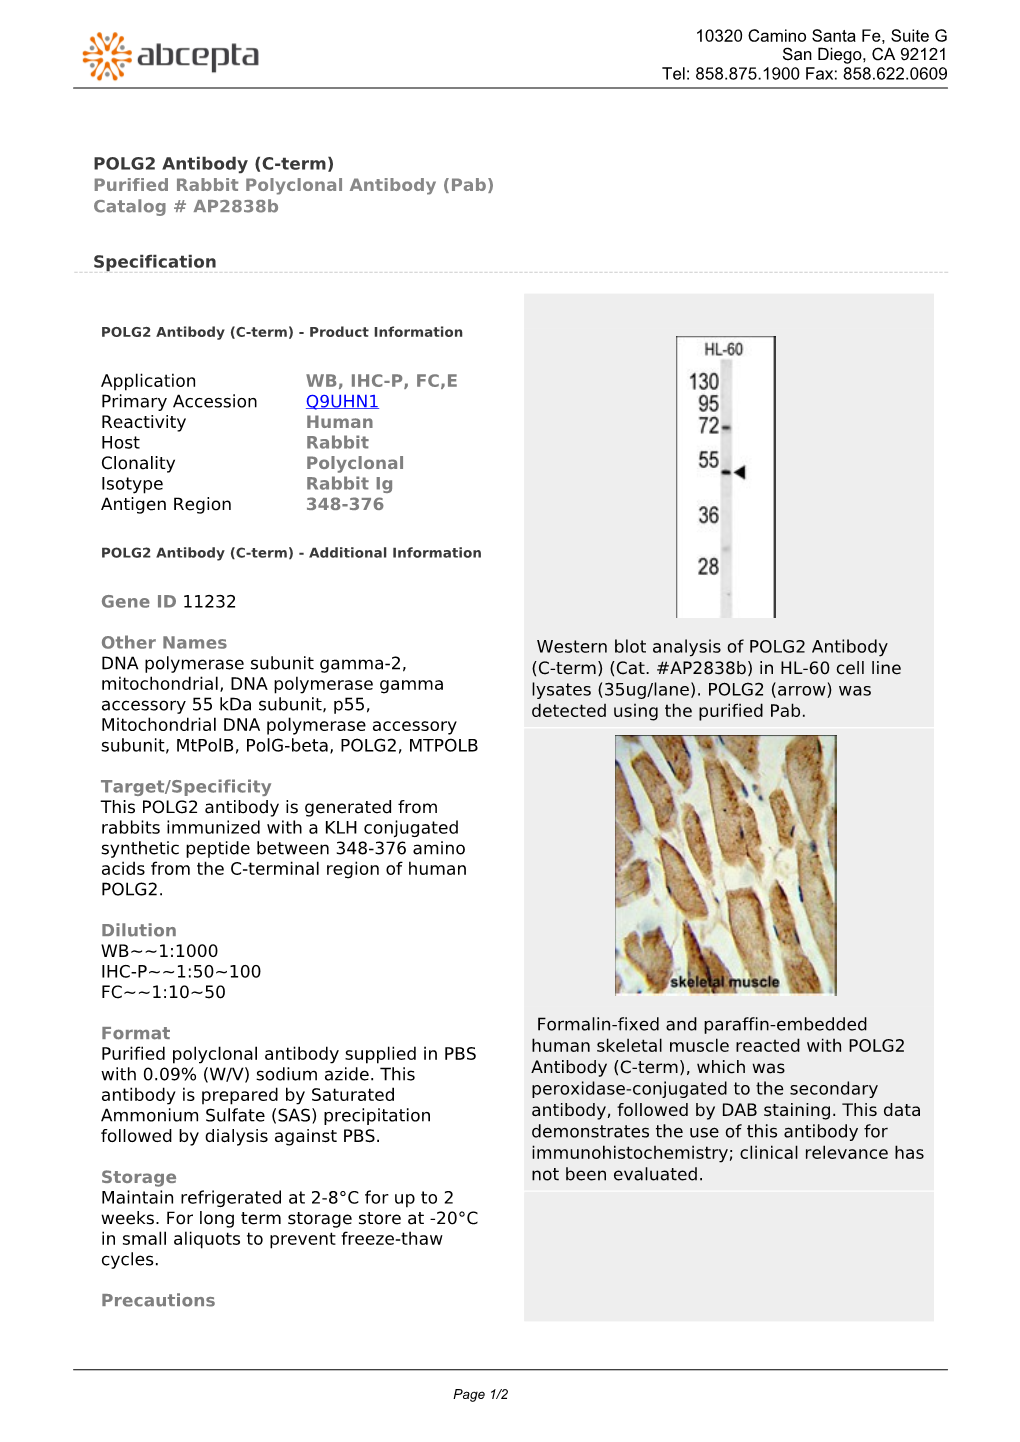 POLG2 Antibody (C-Term) Purified Rabbit Polyclonal Antibody (Pab) Catalog # Ap2838b